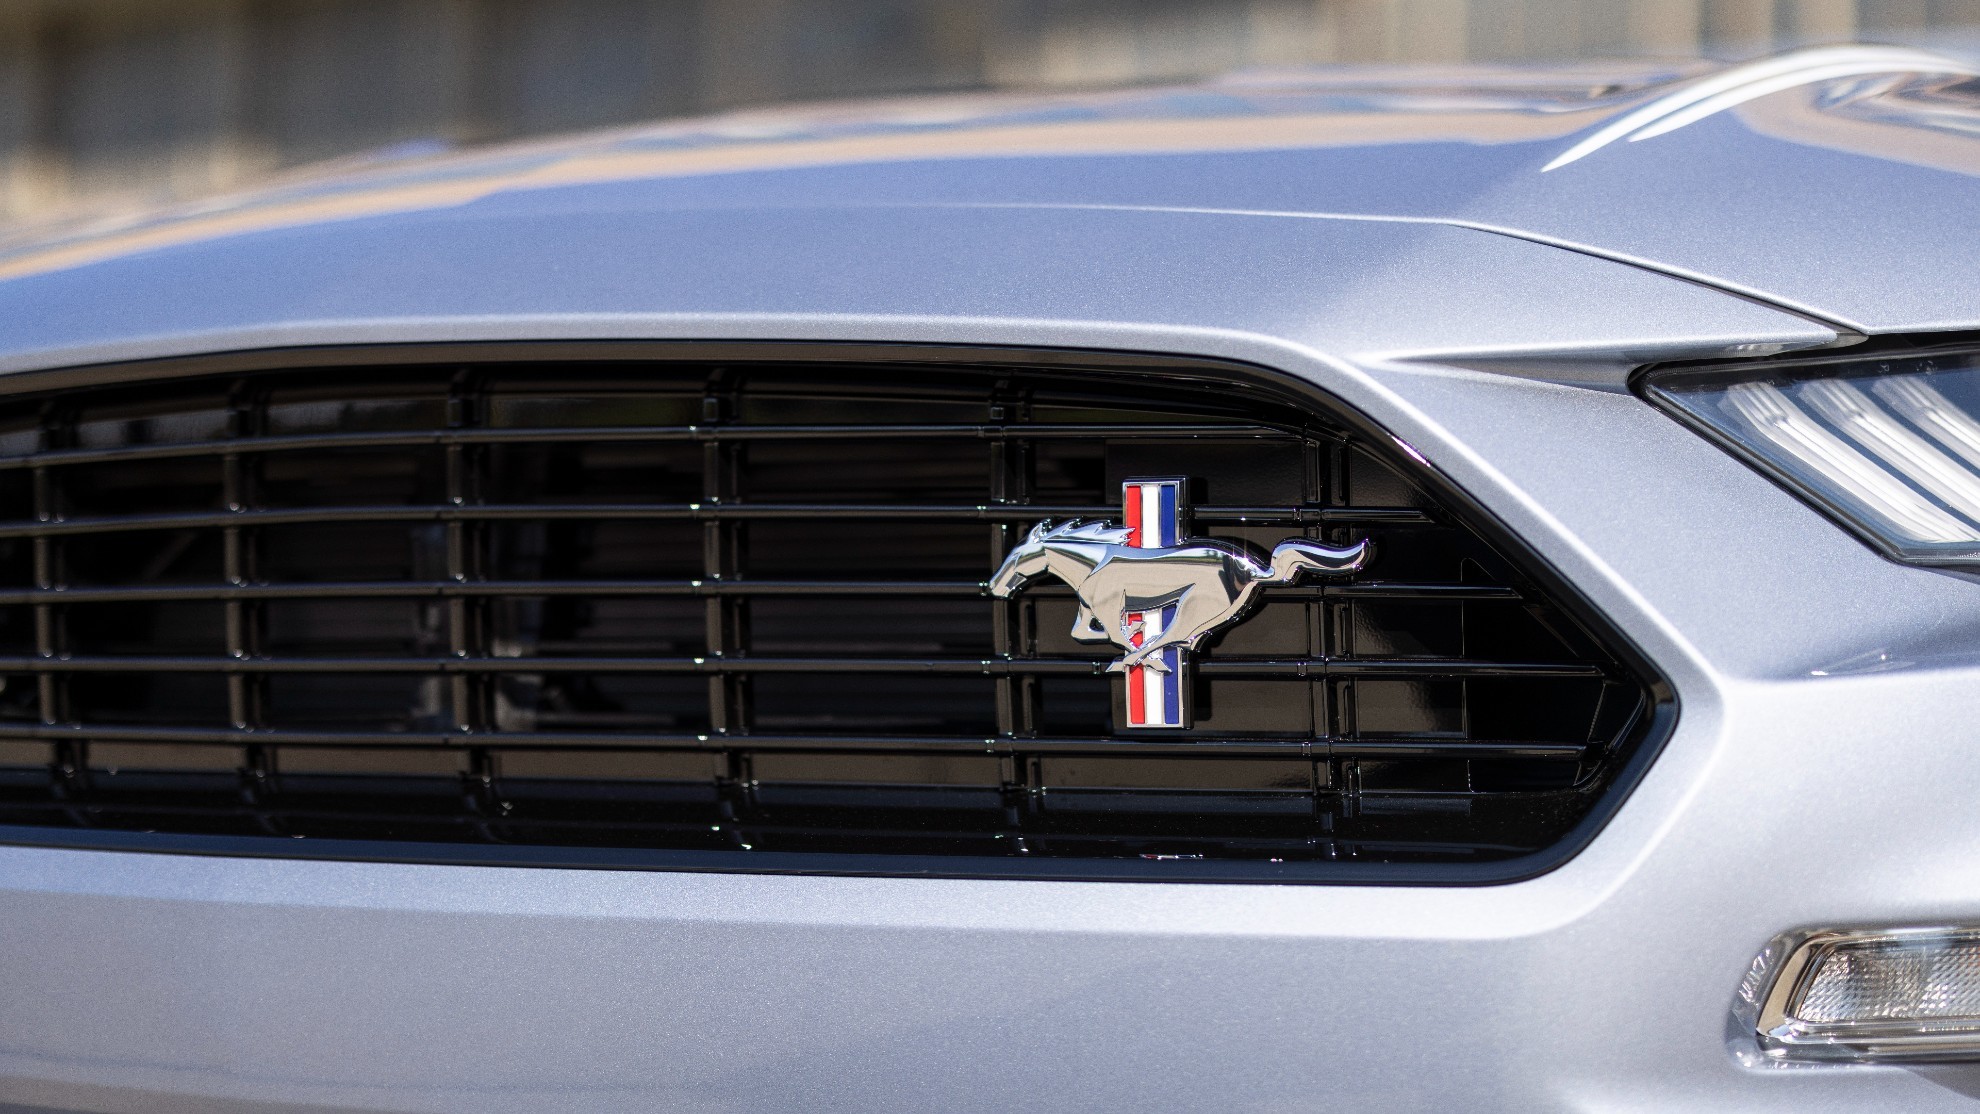 Ford Mustang - deportivo mas vendido del mundo - record de ventas - coche deportivo - pony car